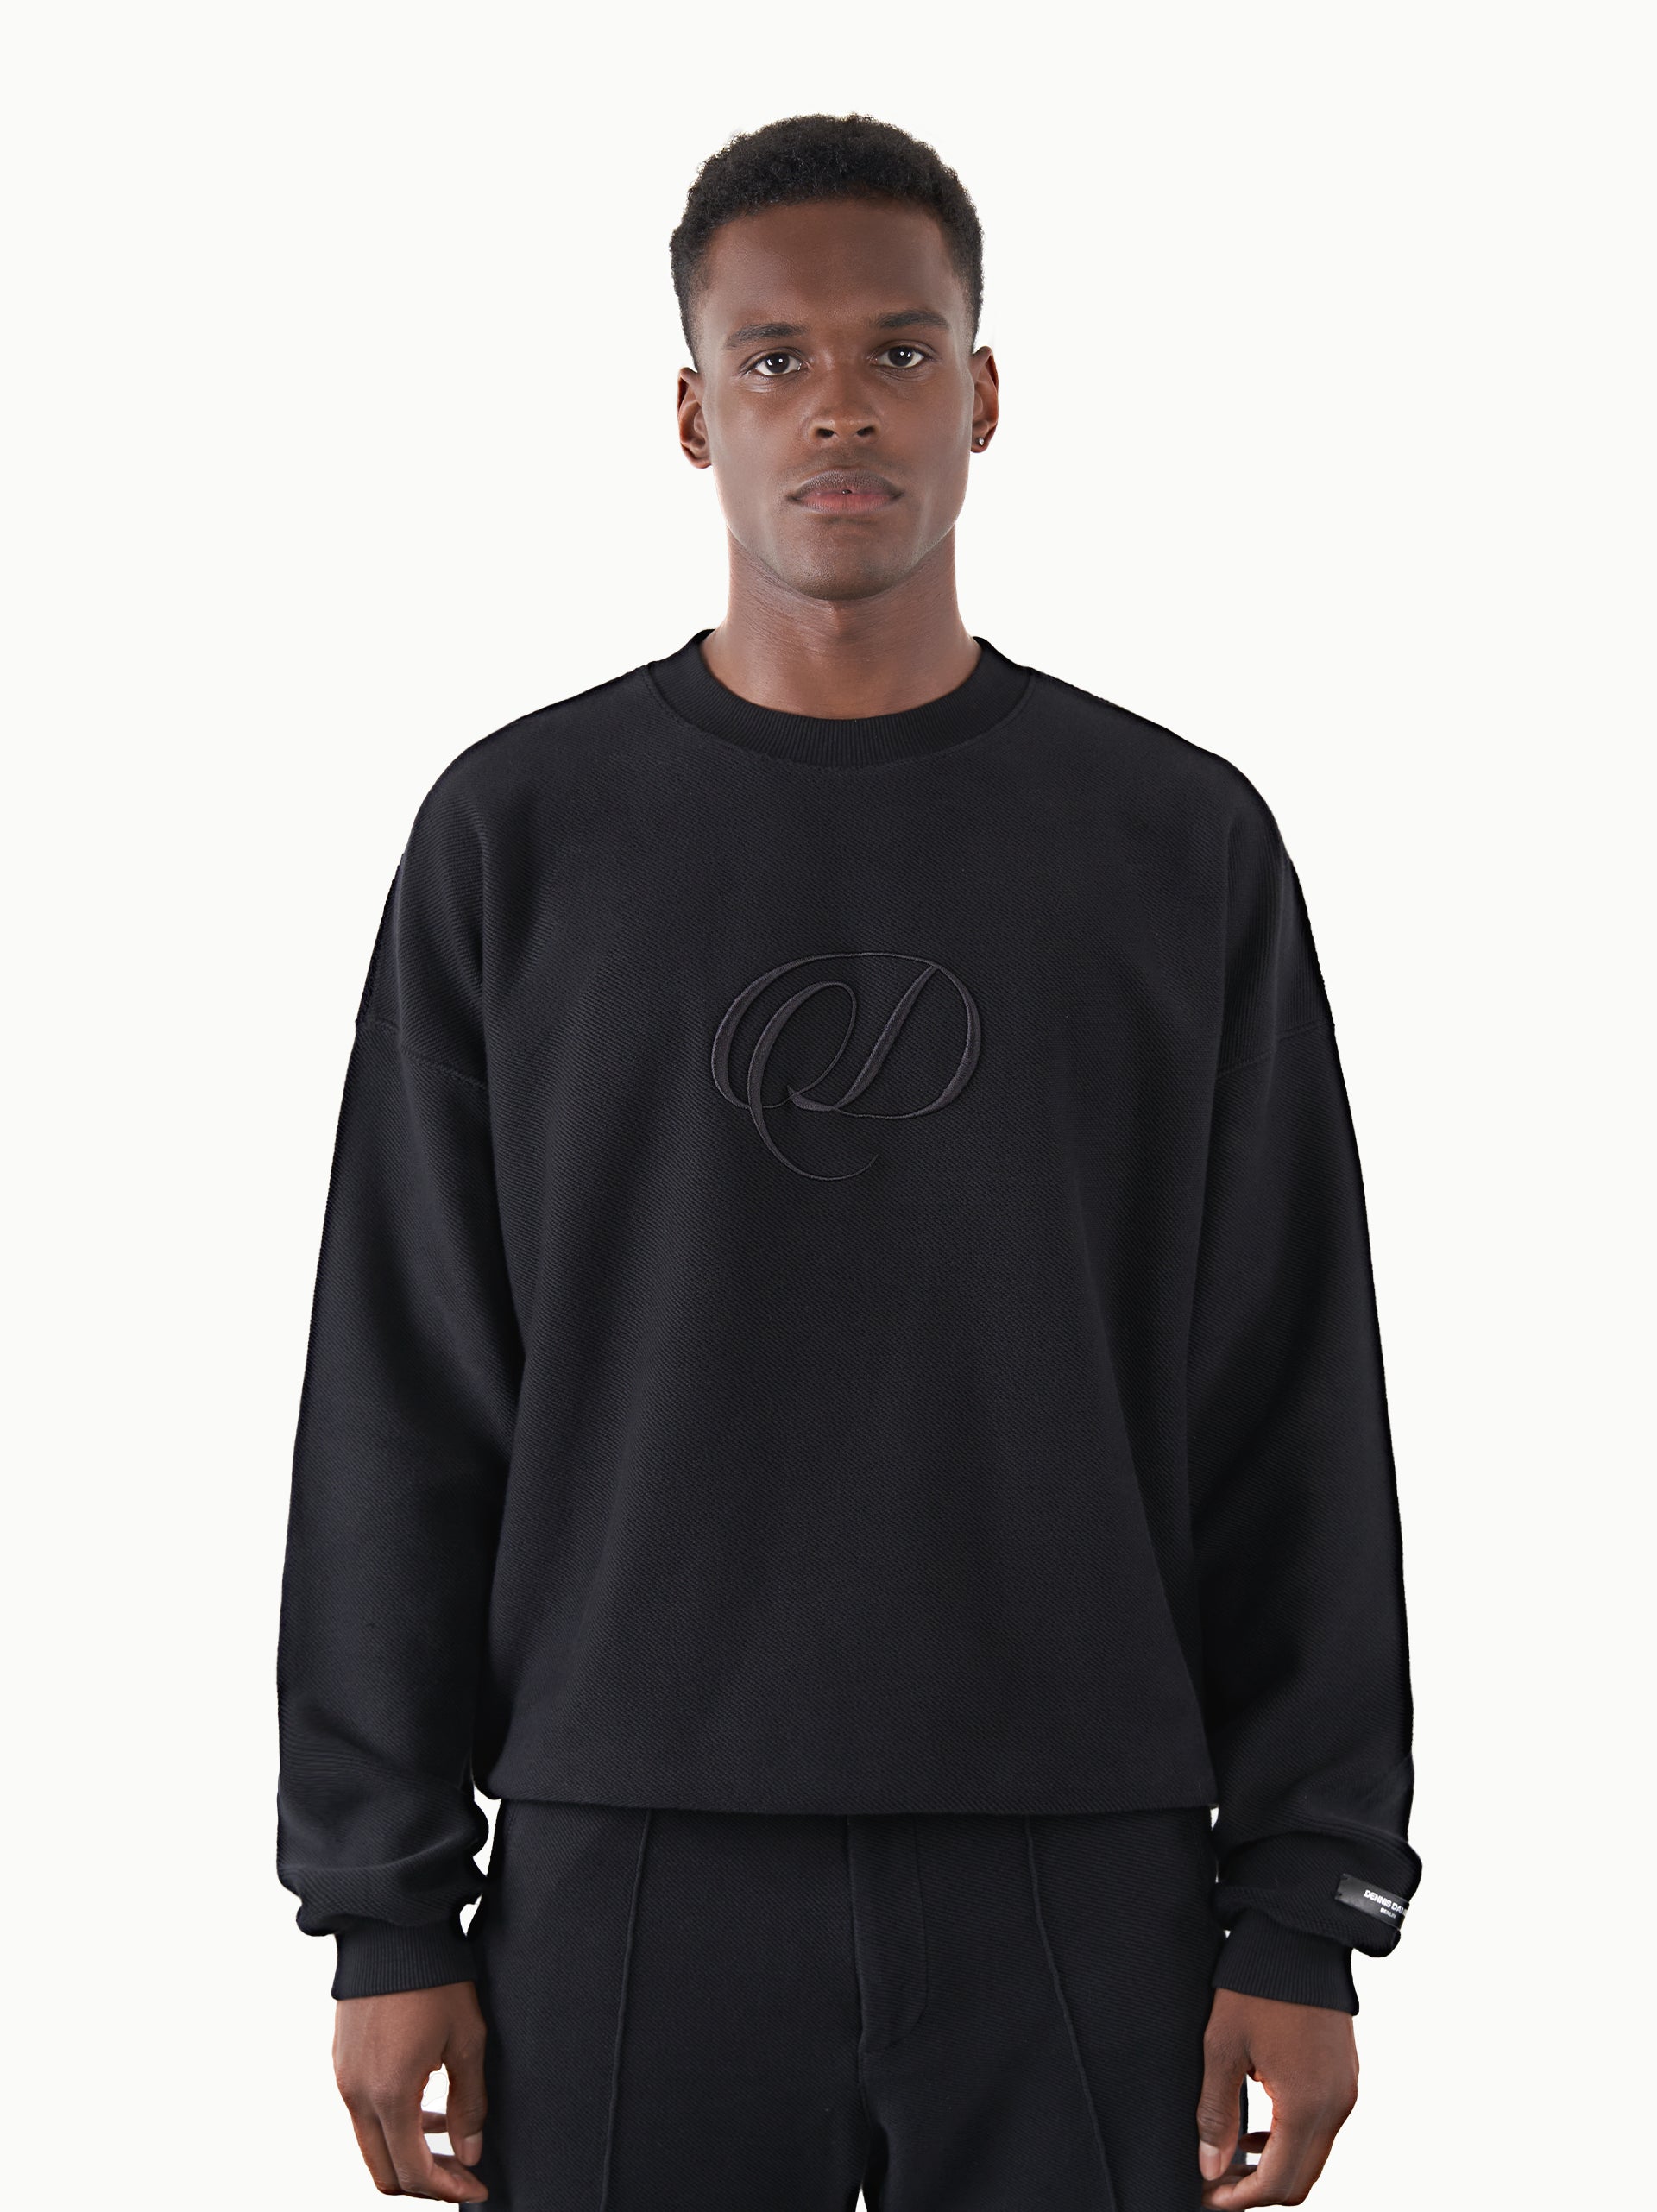 Inside Out Sweater - Black - DENNIS DANIEL™